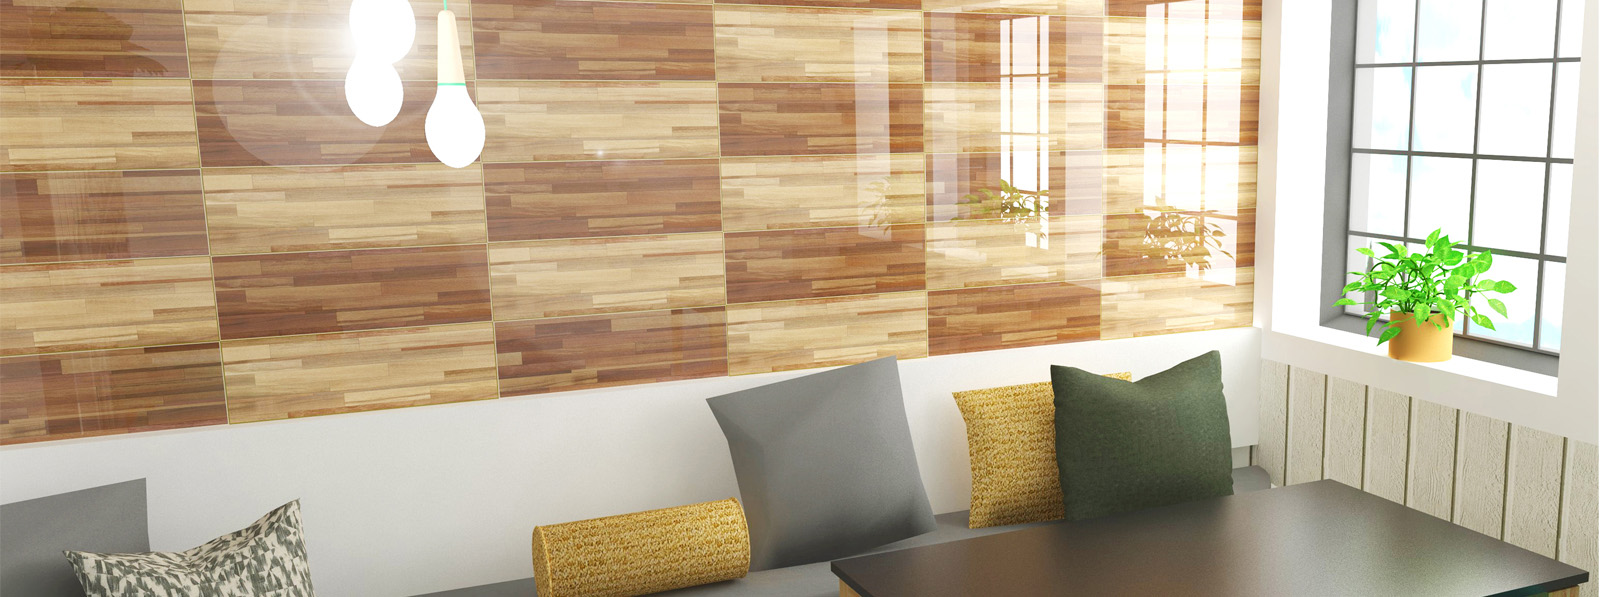 Living Room Mariwasa Granite Tiles 60x60 - Home Design Ideas